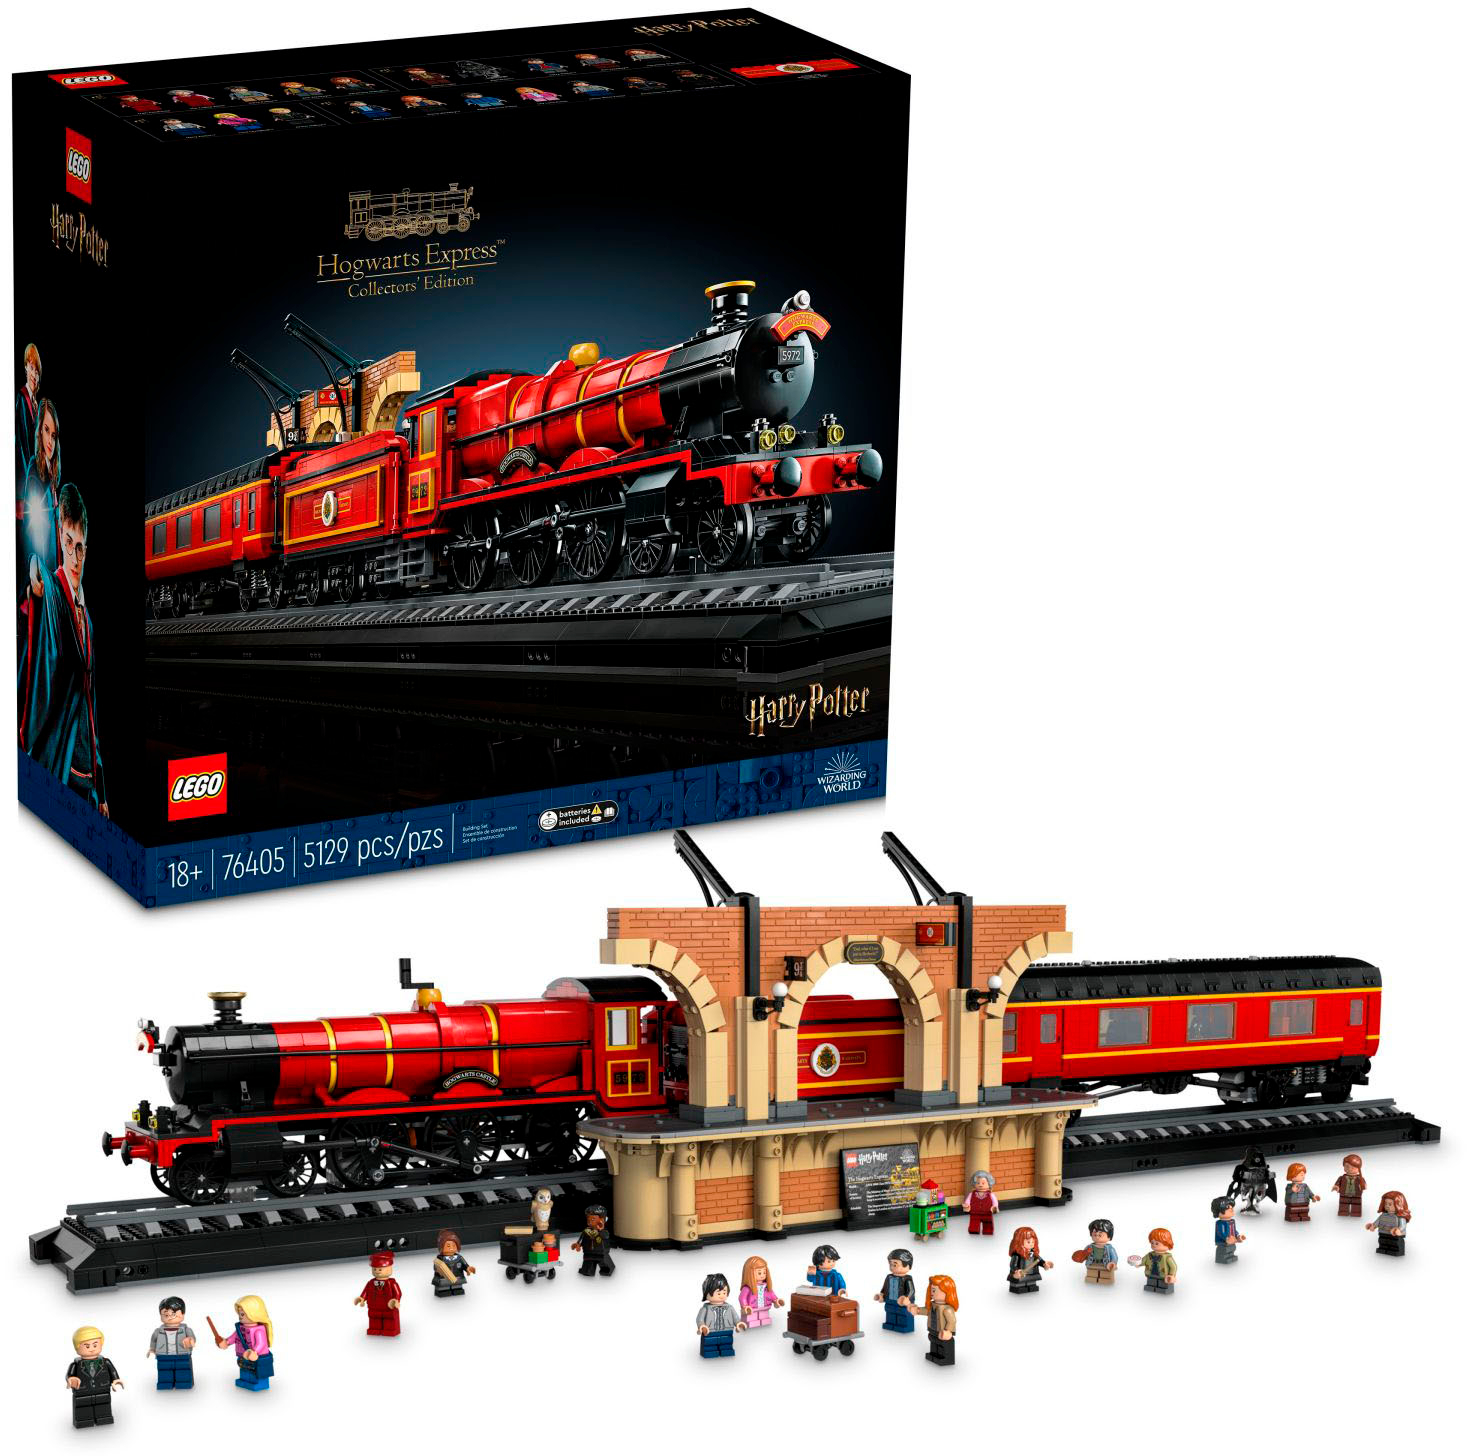 Lectura cuidadosa Velo baloncesto LEGO Harry Potter Hogwarts Express – Collectors' Edition 76405 6378985 -  Best Buy